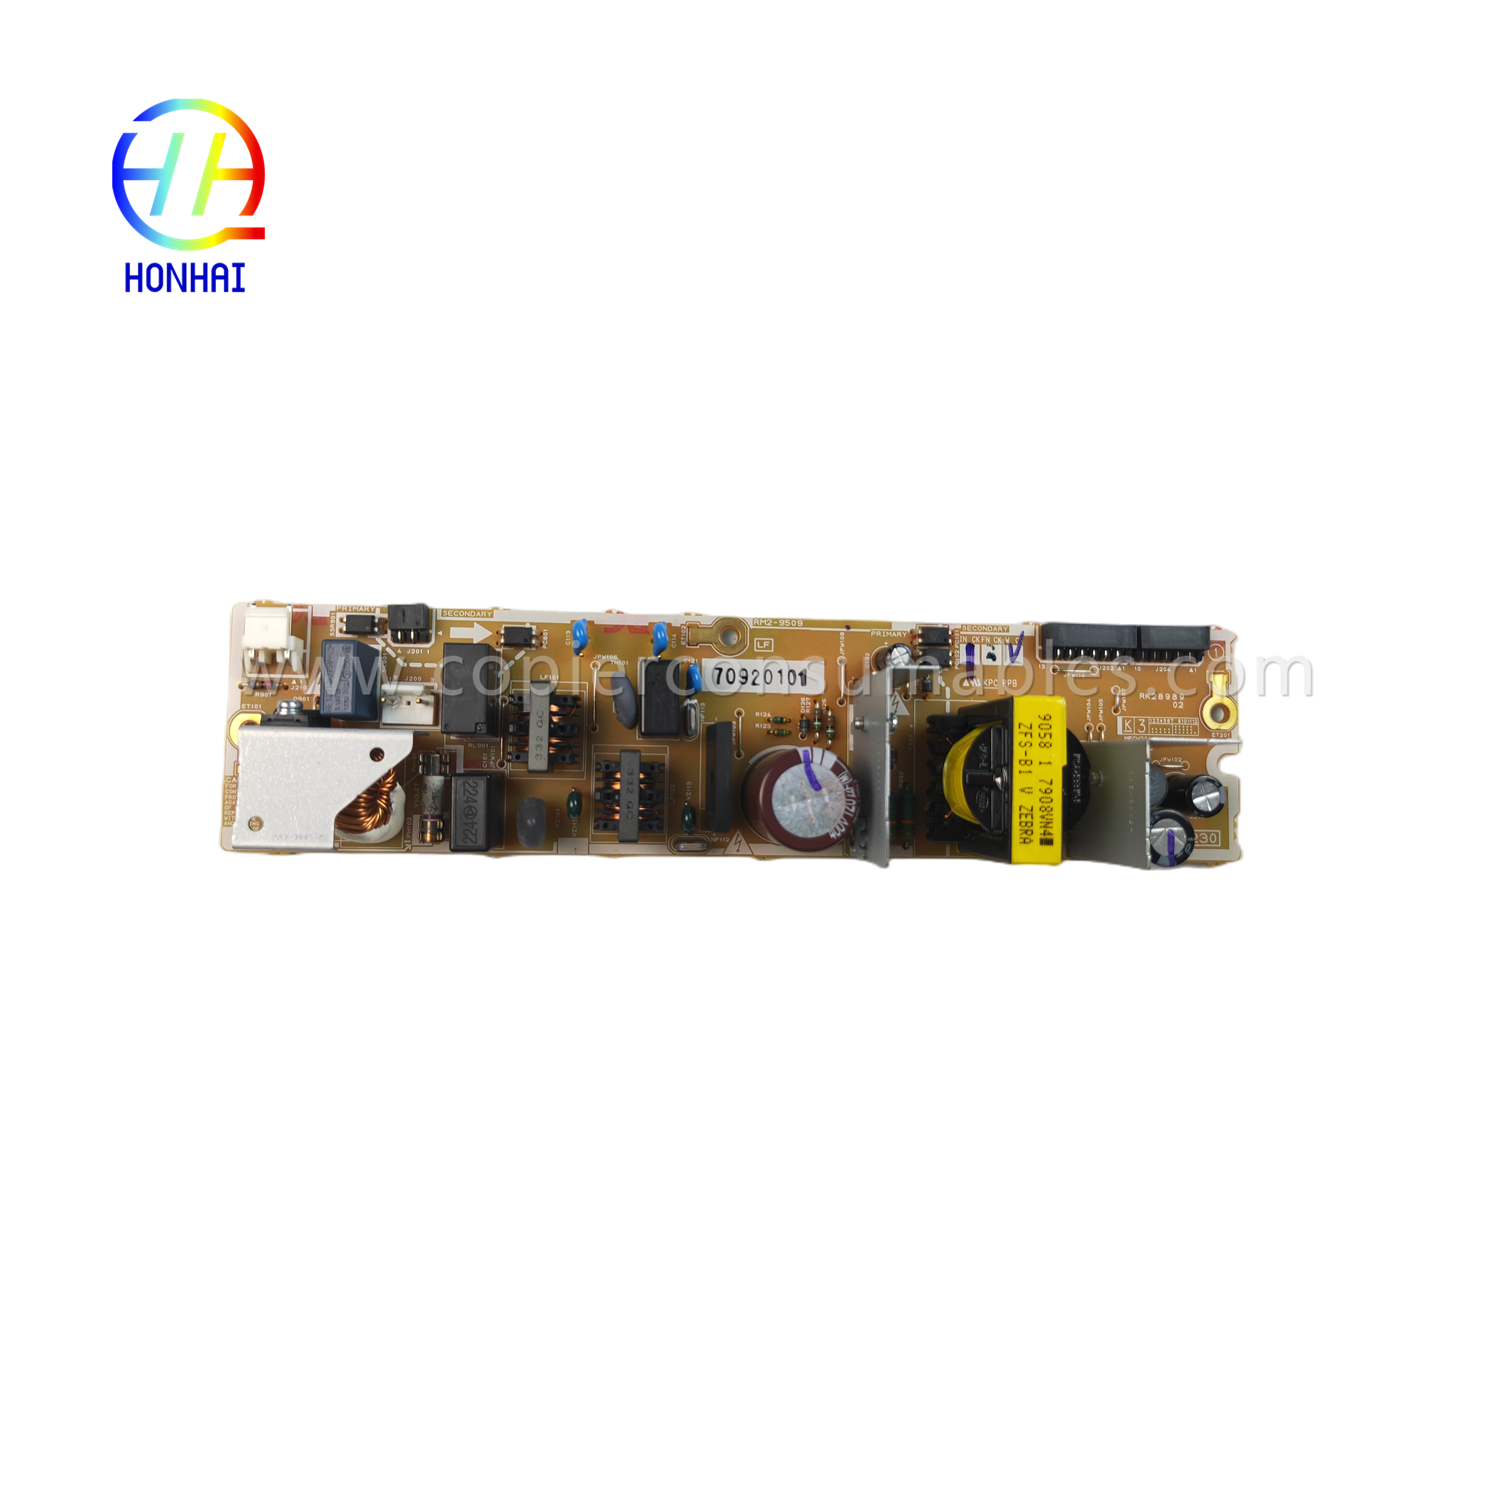 https://c585.goodao.net/power-supply-220v-for-hp-color-laserjet-pro-mfp-m283fdw-rm2-2428-product/